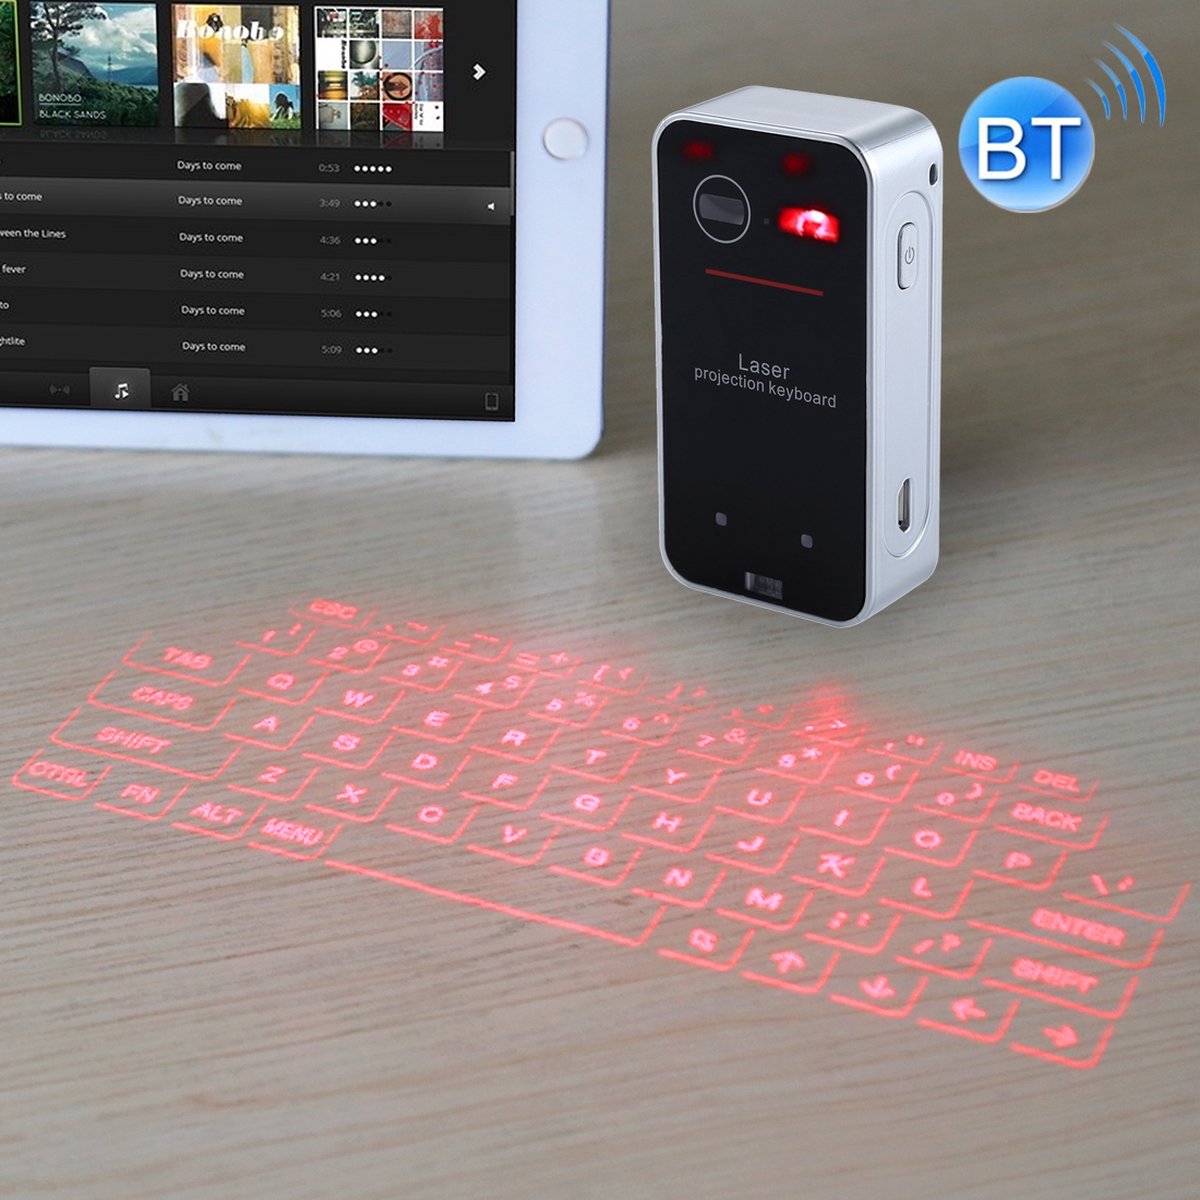 Mini Pocket Virtual Bluetooth Laser projectie toetsenbord voor Android / iPhone / Apple / PC etc. (zwart)